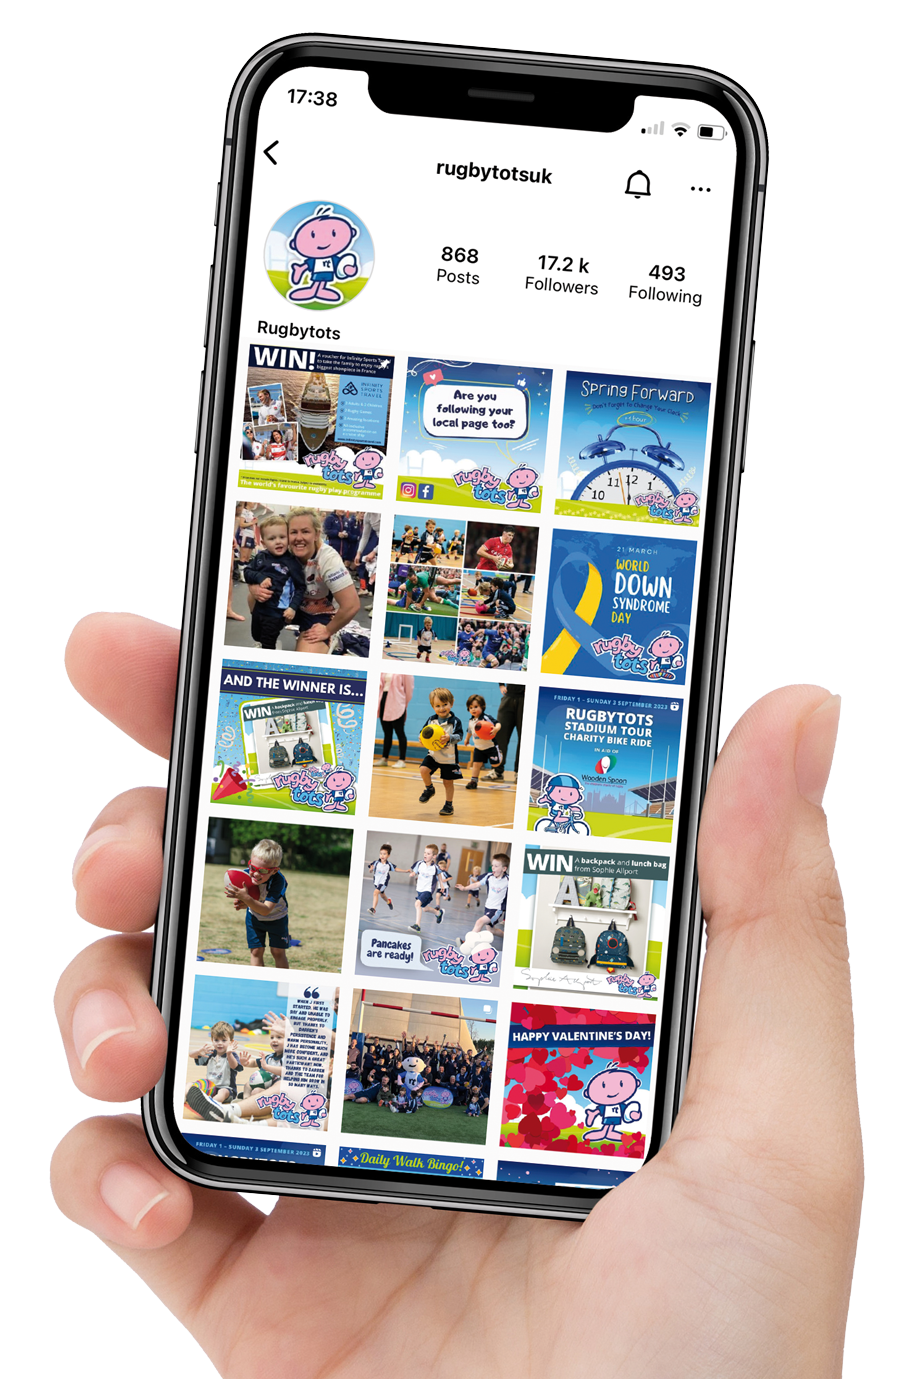 Rugbytots' Instagram social media posts on a smartphone